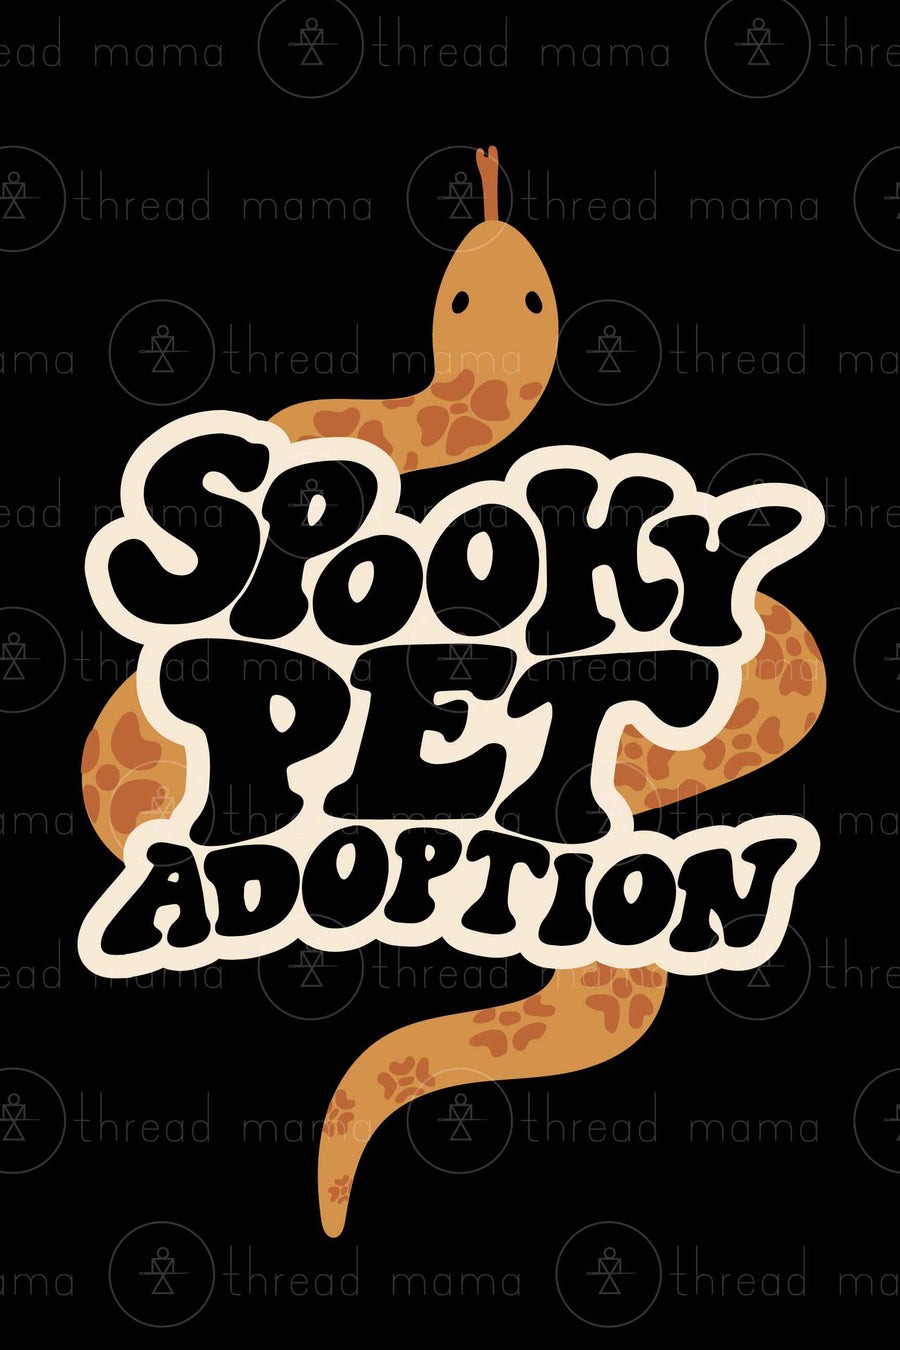 Spooky Pet Adoption (2 options)